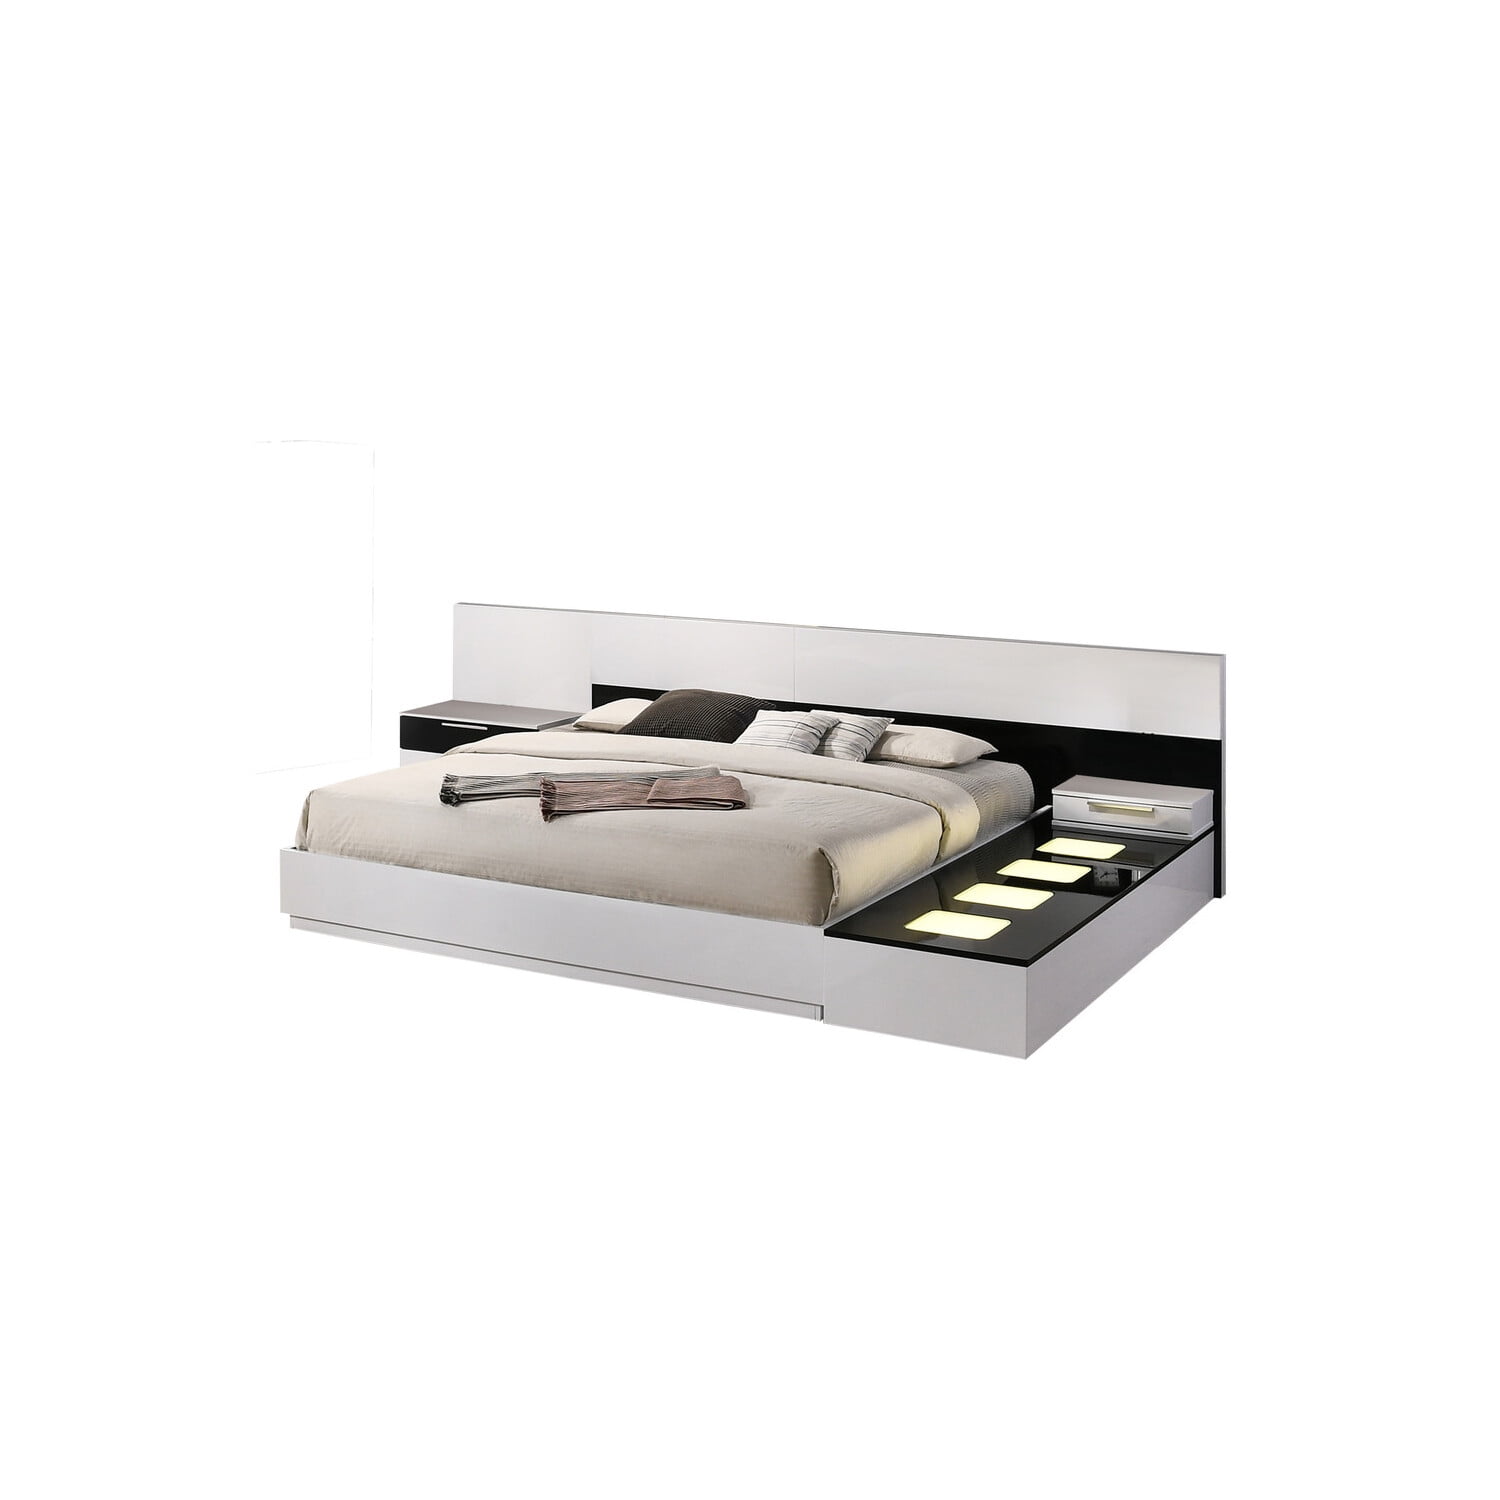 Best Master Furniture Bahamas 4-Piece California King Platform Bedroom Set in White/Black